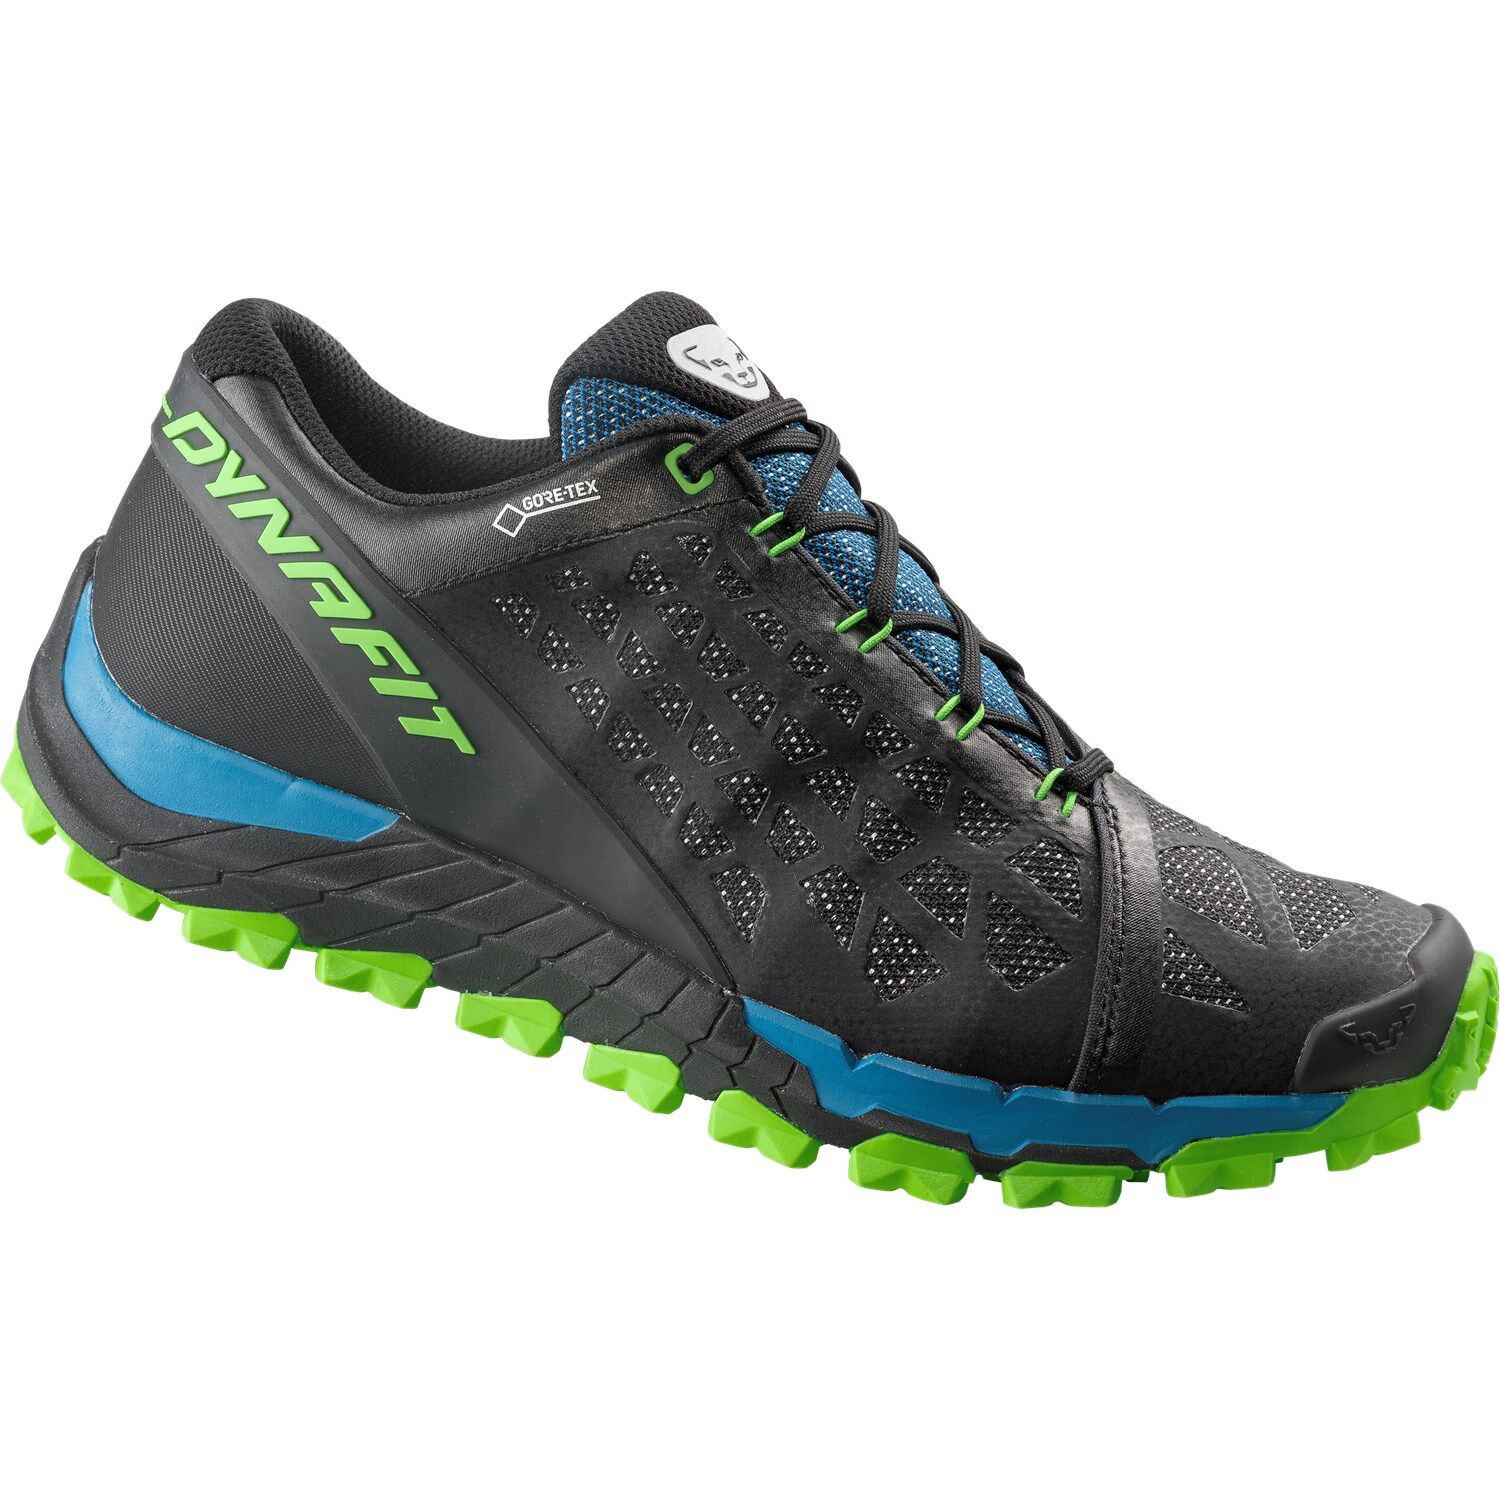 Dynafit Trailbreaker Evo GTX - Trail running shoes - Men's